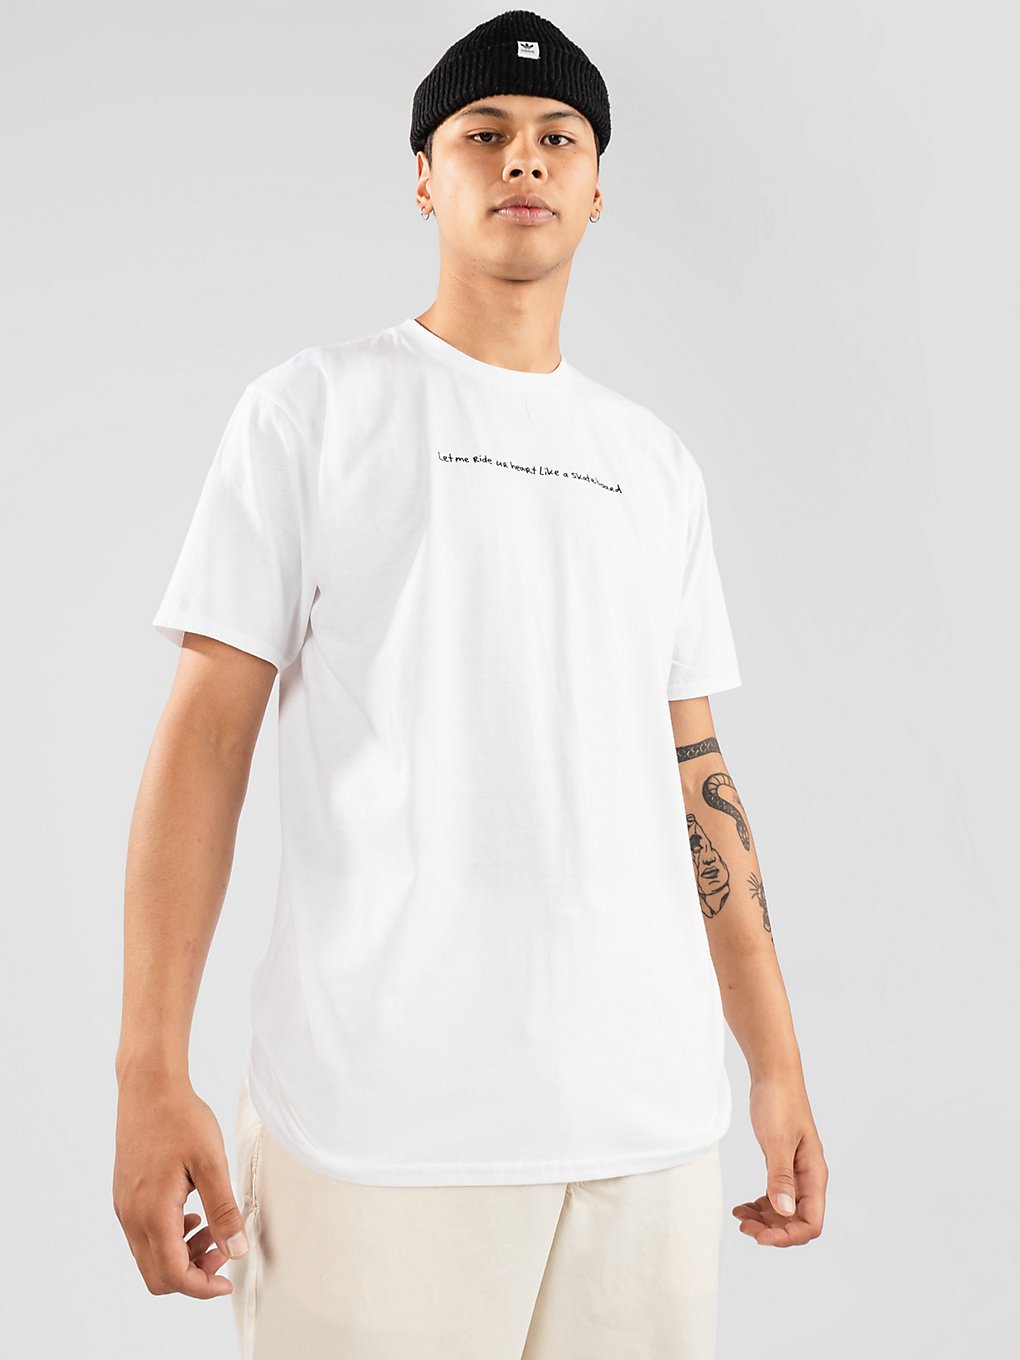 Leon Karssen Heartboard T-Shirt white kaufen